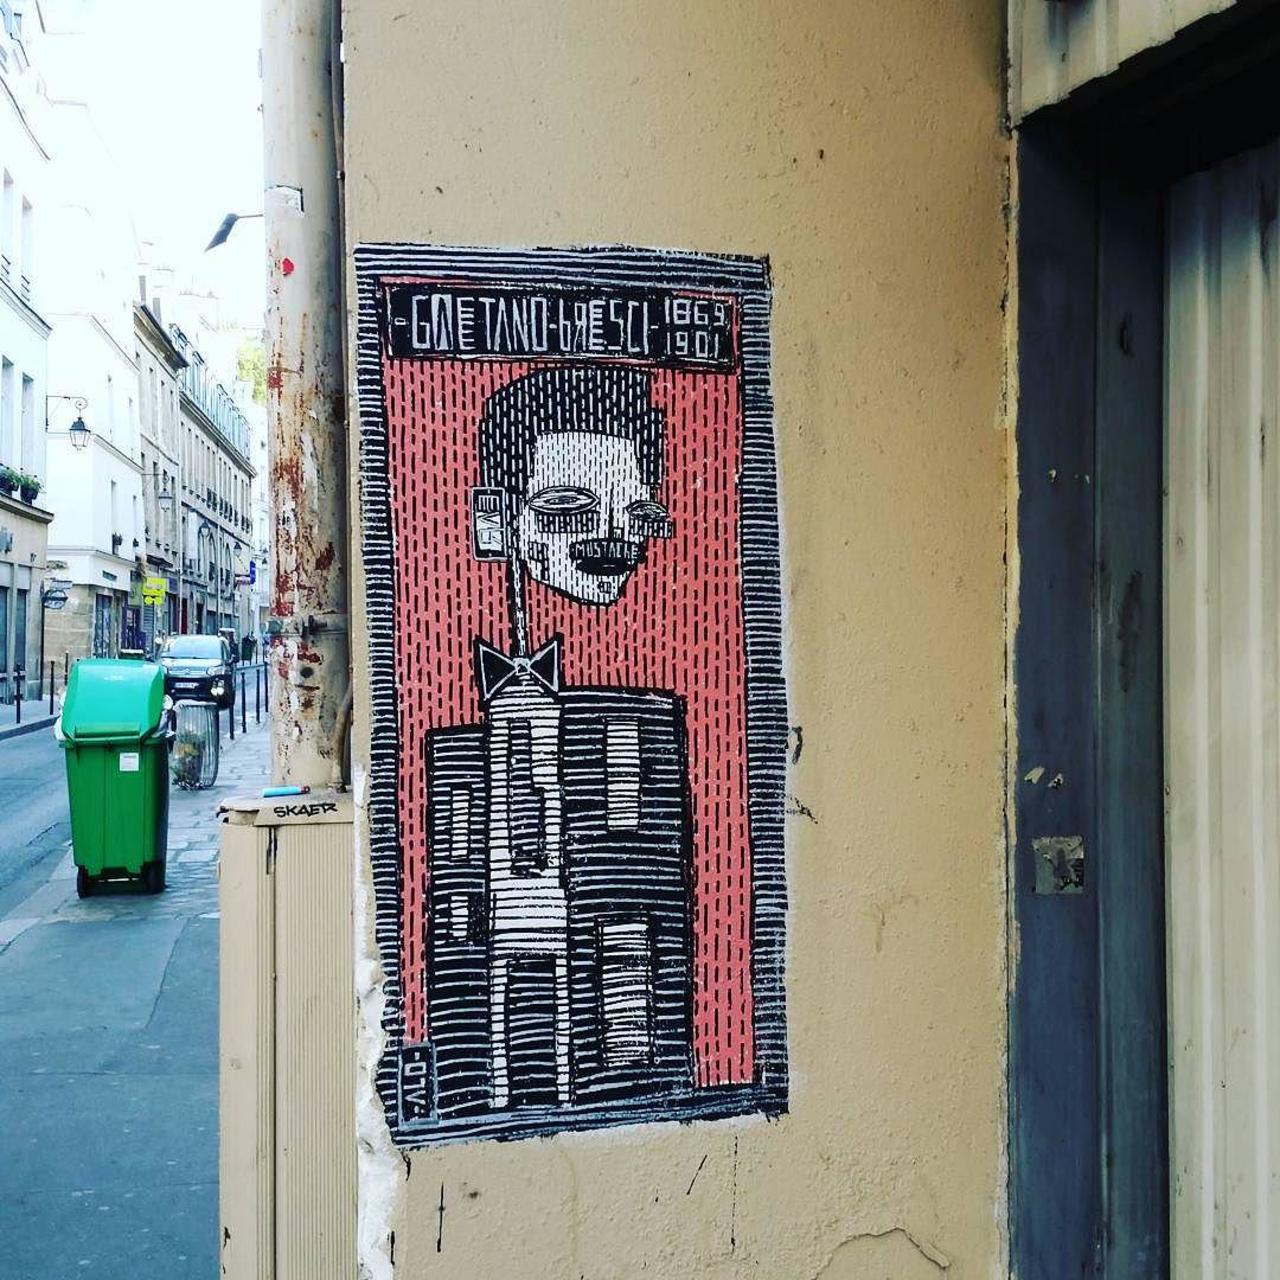 #Paris #graffiti photo by @mrsaurelie http://ift.tt/1KVYxDh #StreetArt http://t.co/IRhhTvcM9b